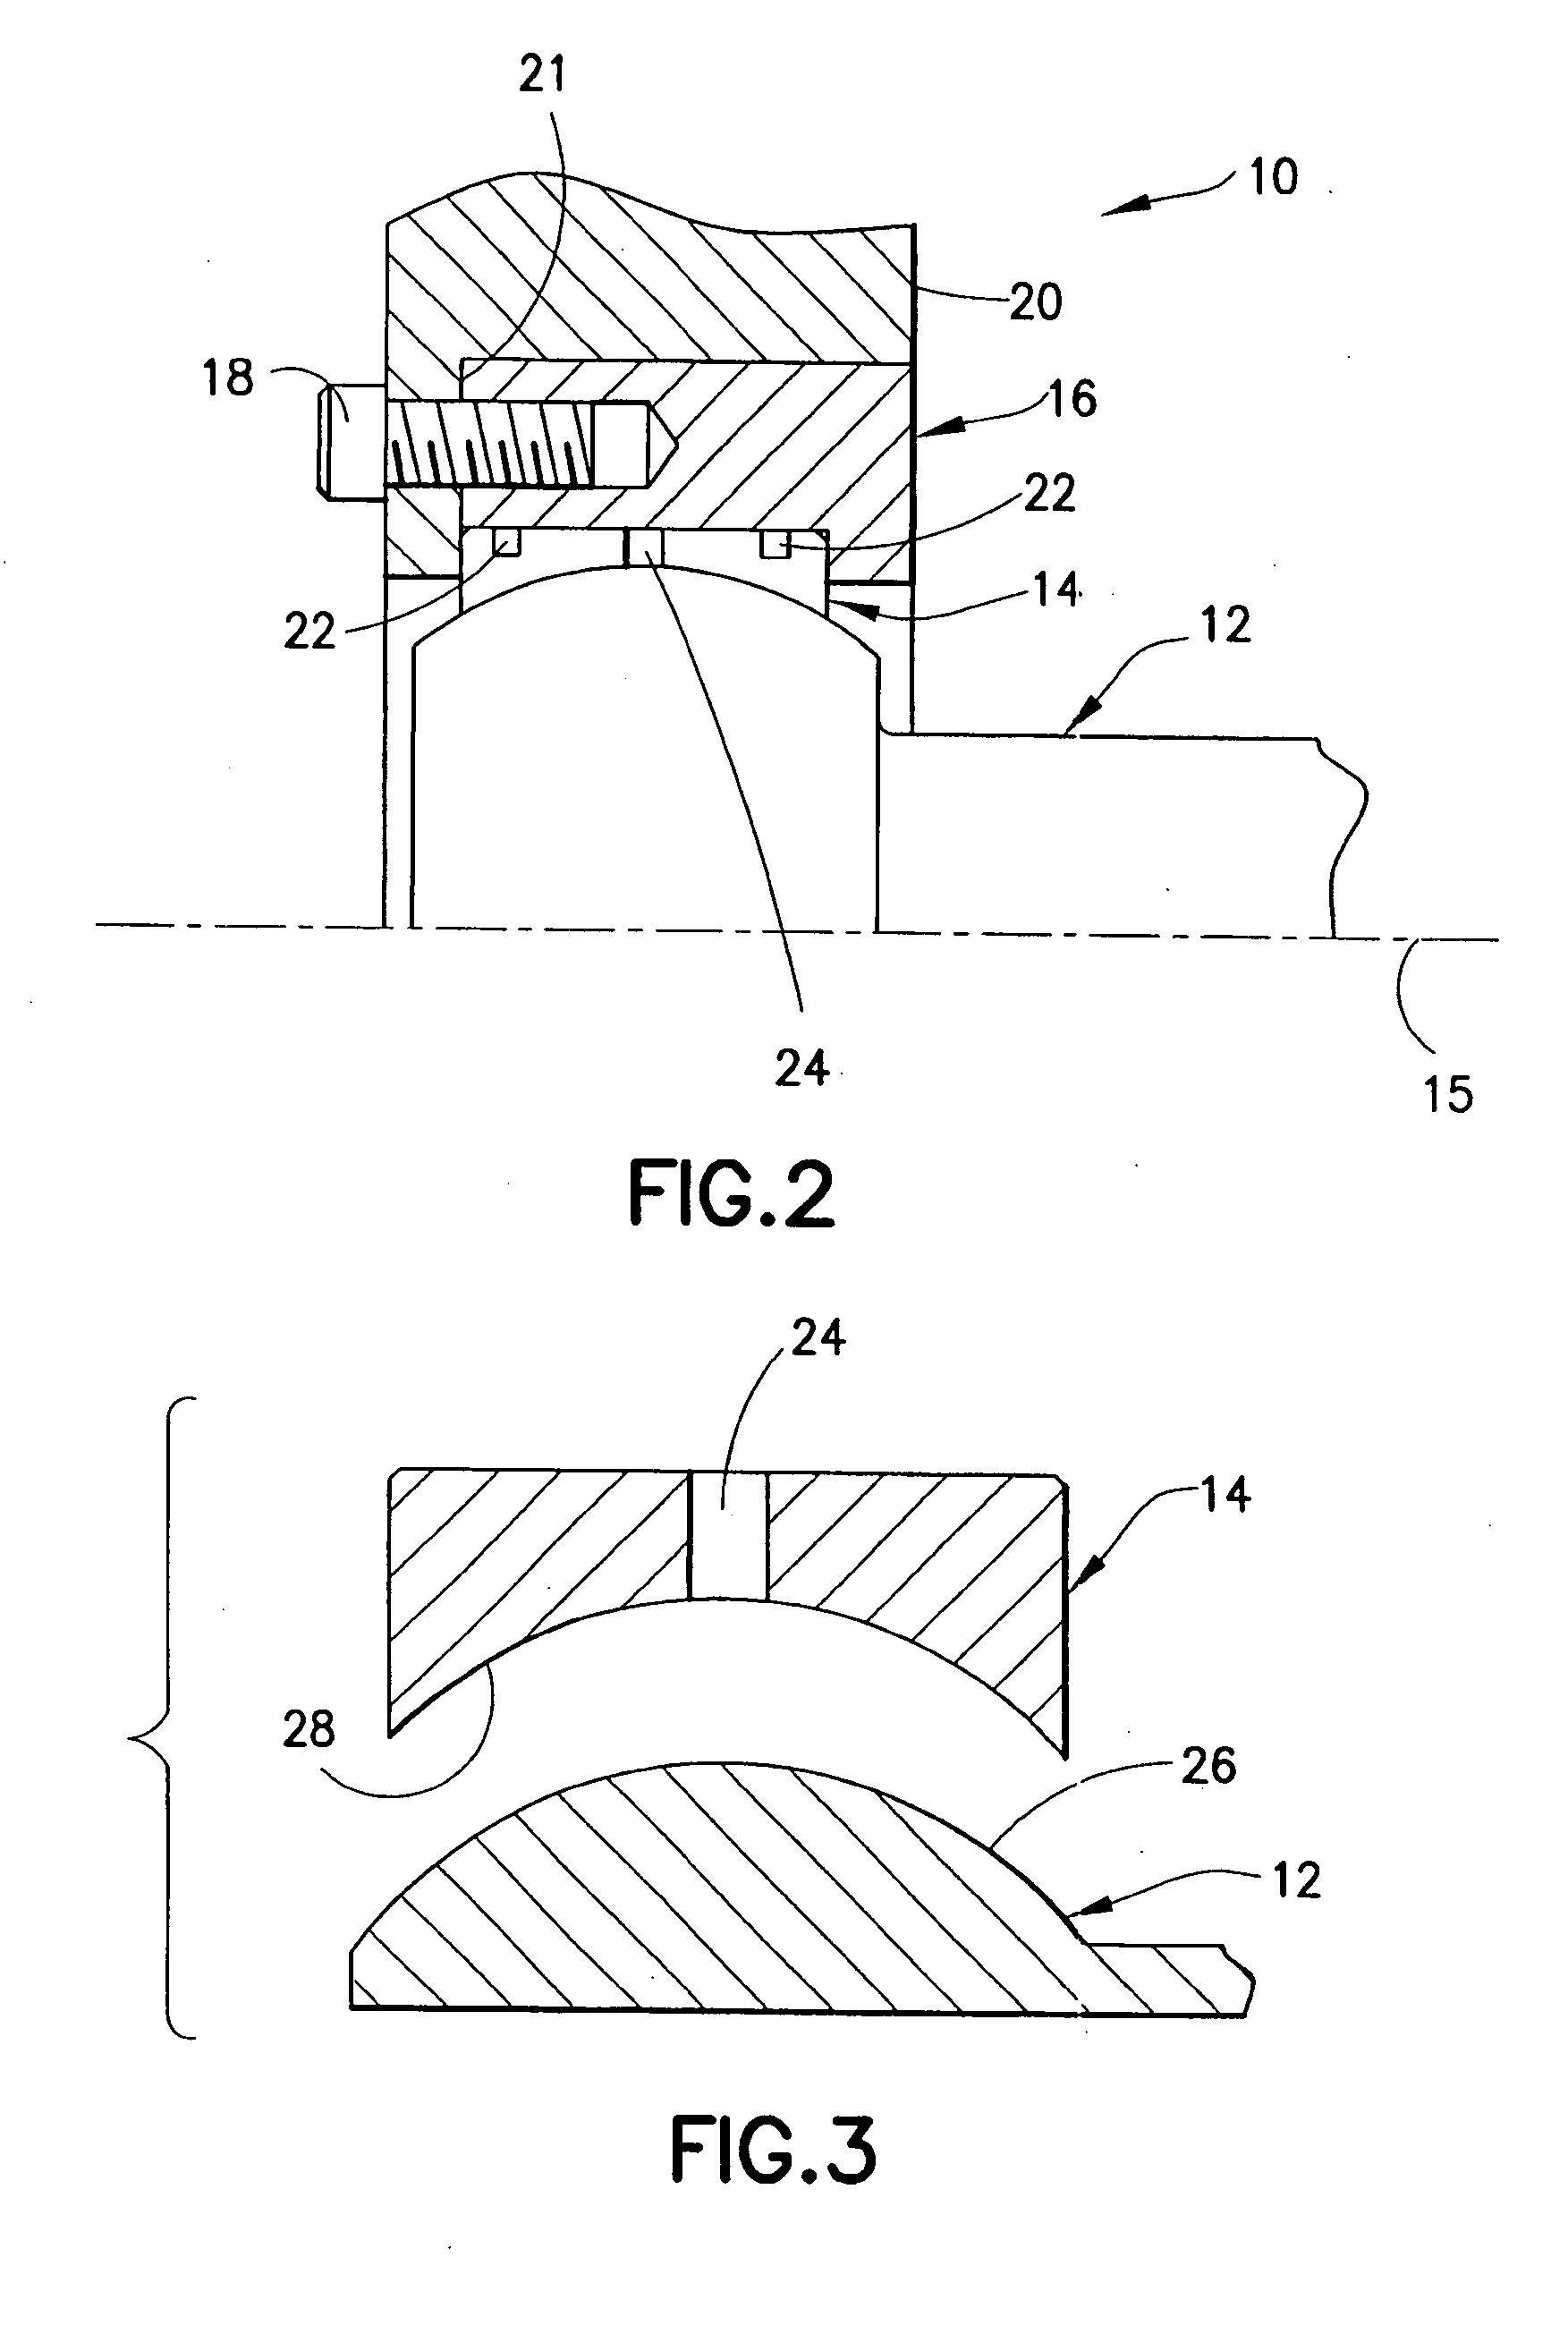 Bearing arrangement for an axle mount of an articulated vehicle